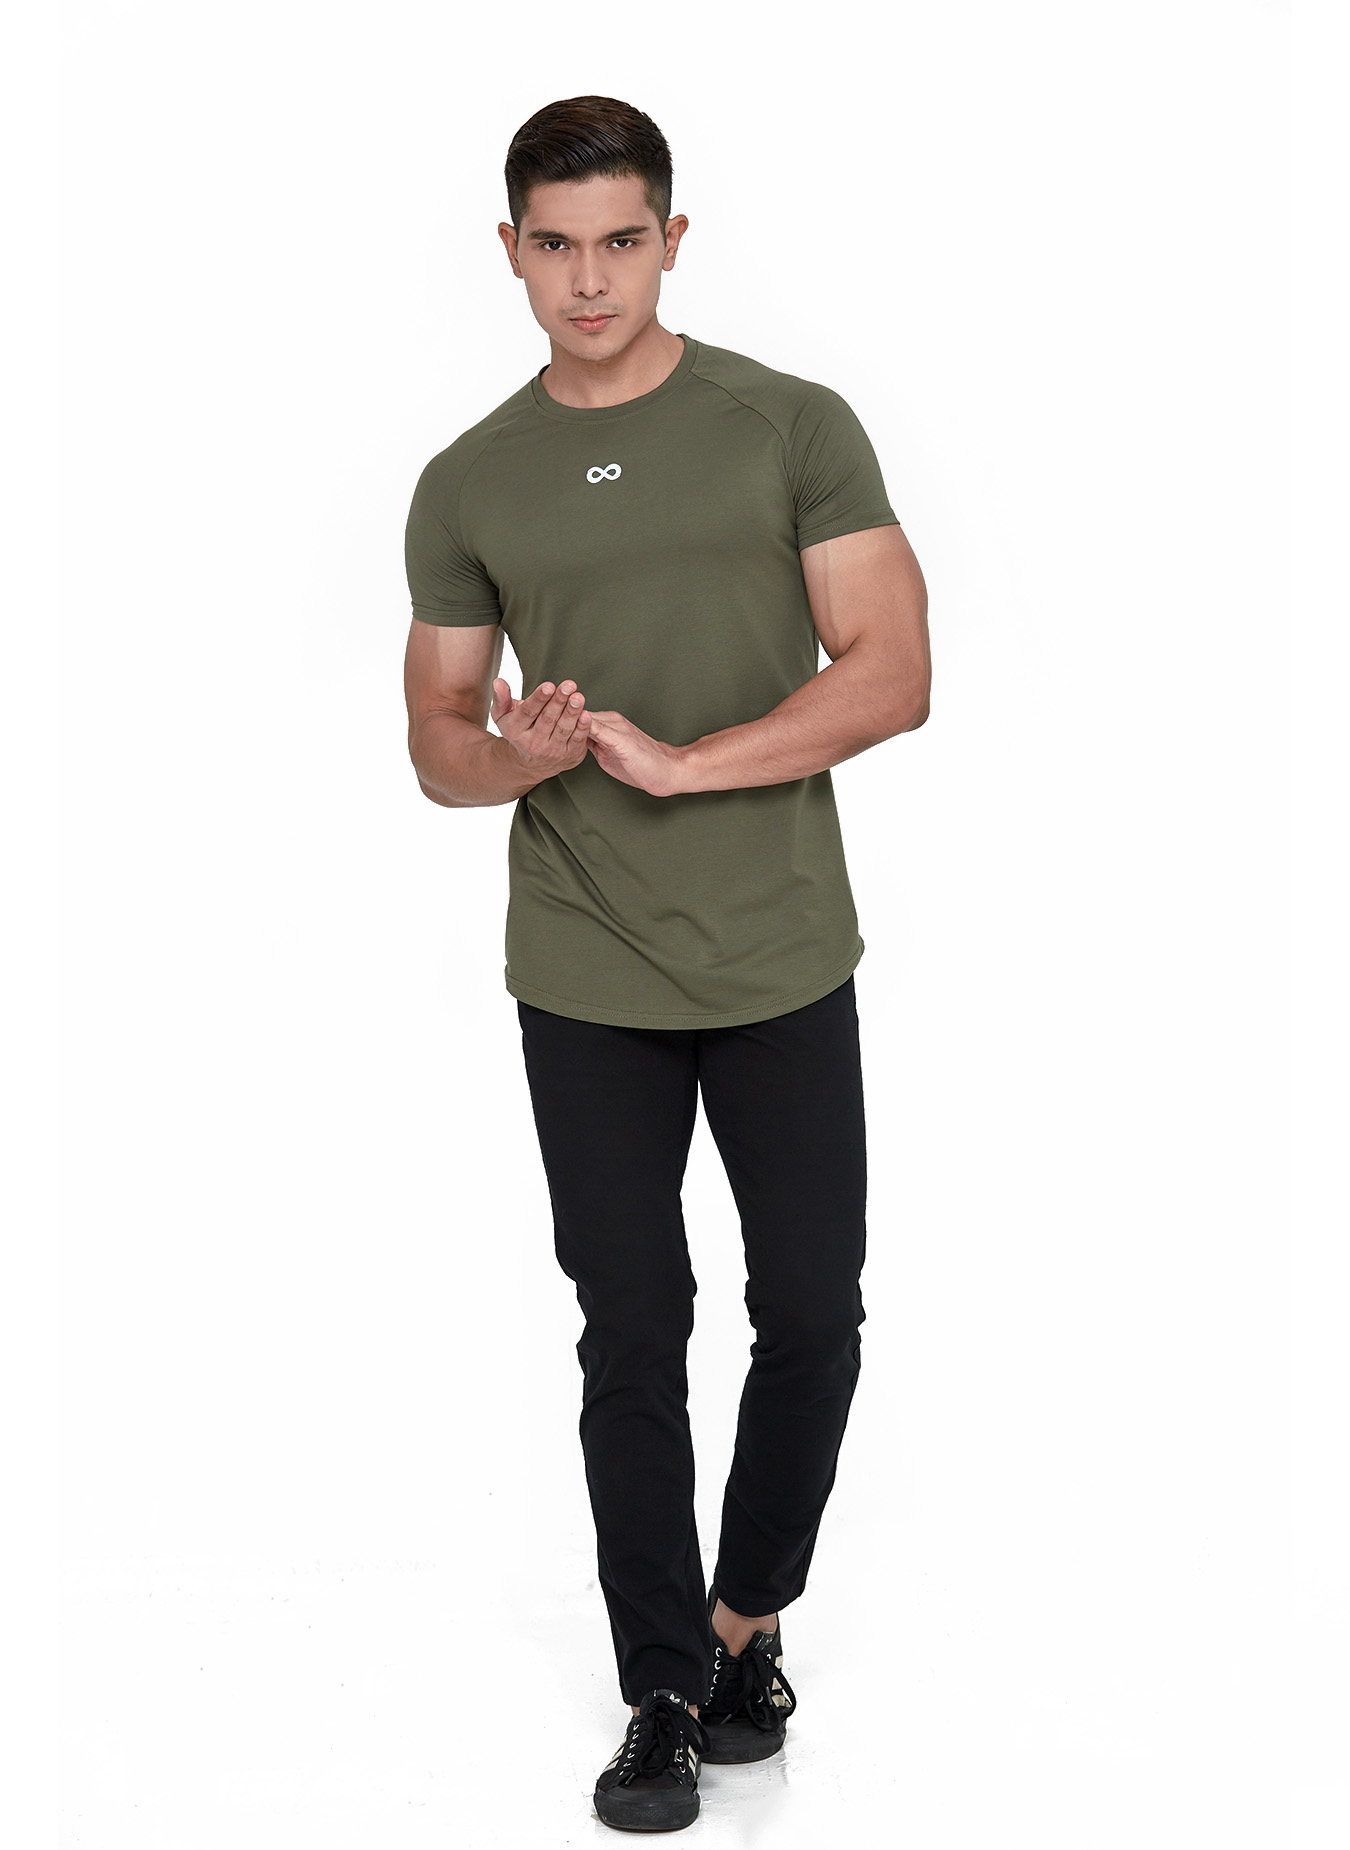 CoreFlex Gym T-Shirt - Army Green | Snurck Outfit